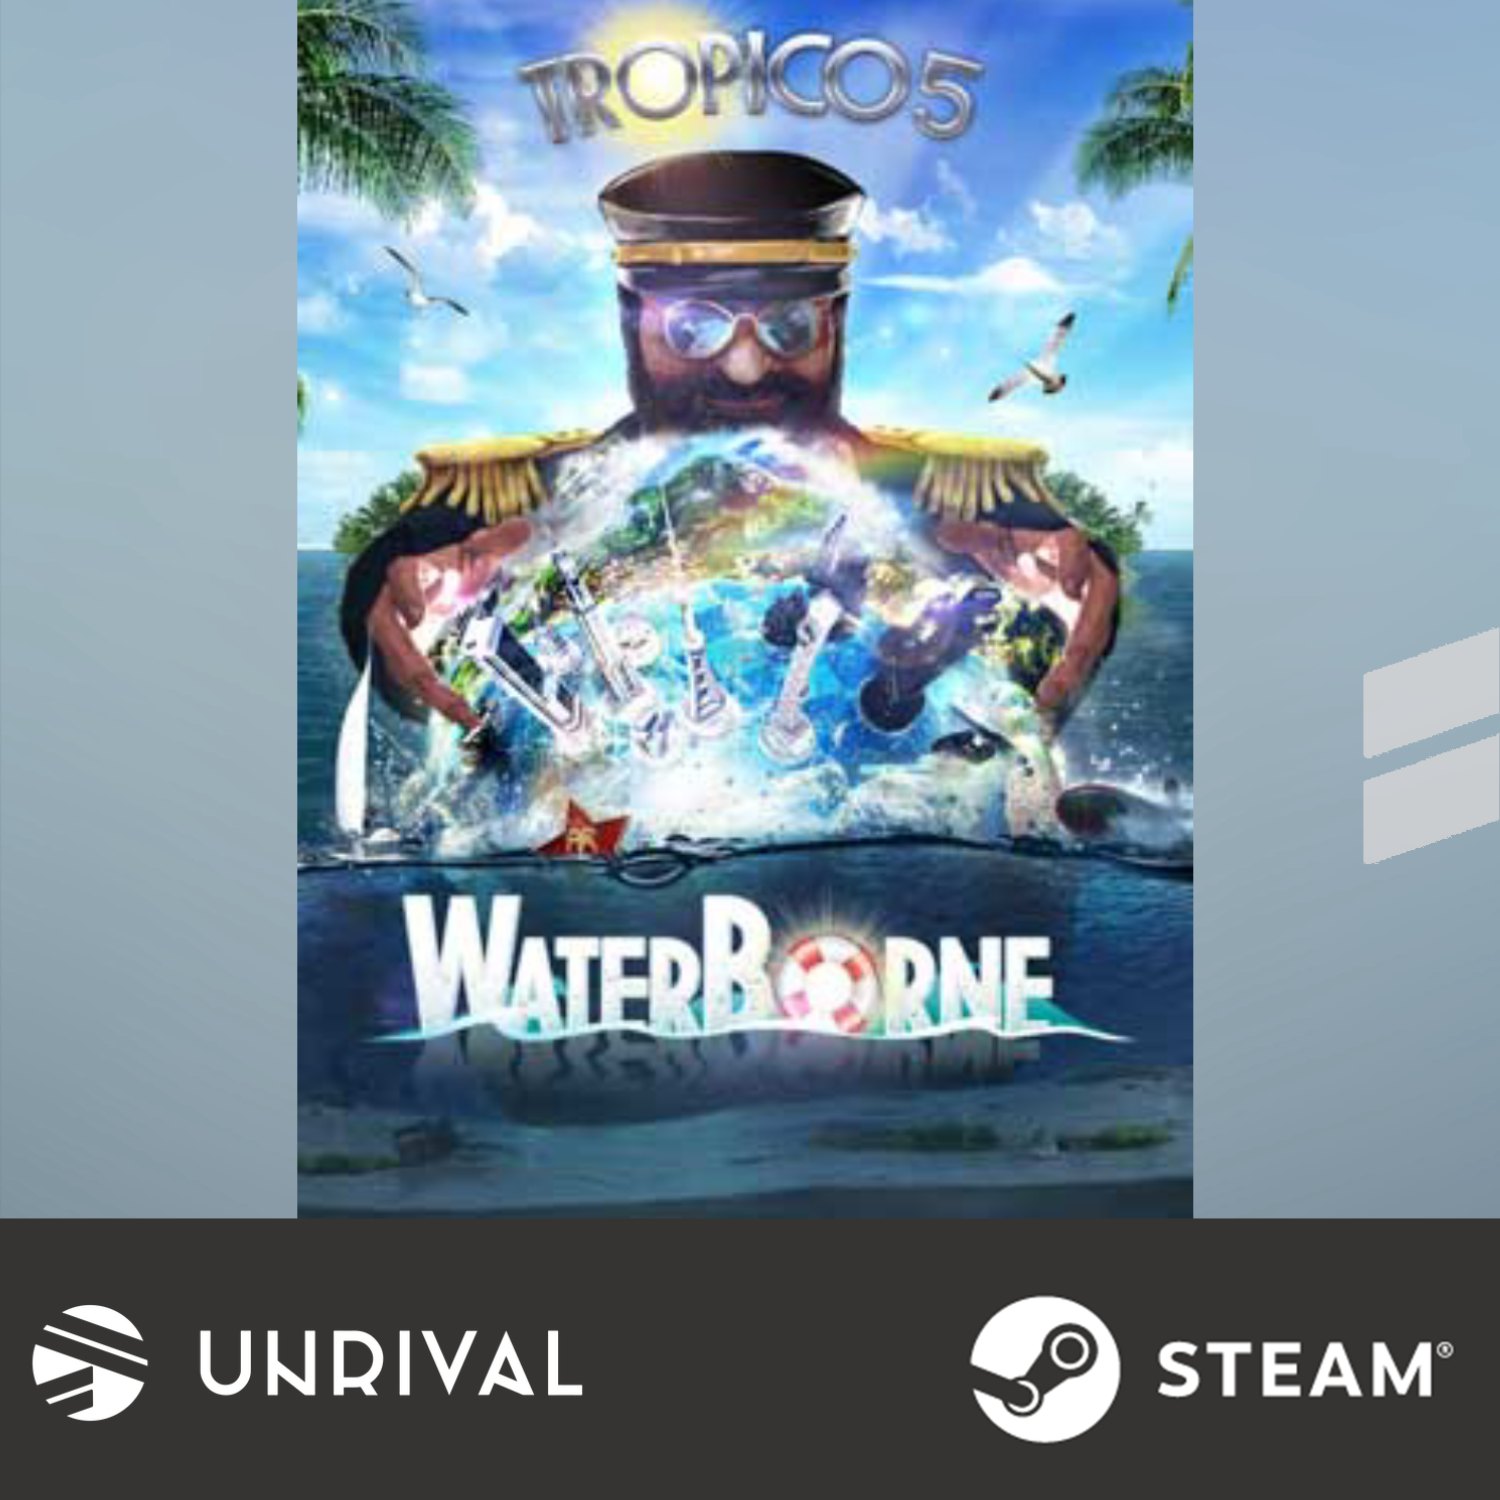 Tropico 5 - Waterborne (DLC) PC Digital Download Game - Unrival